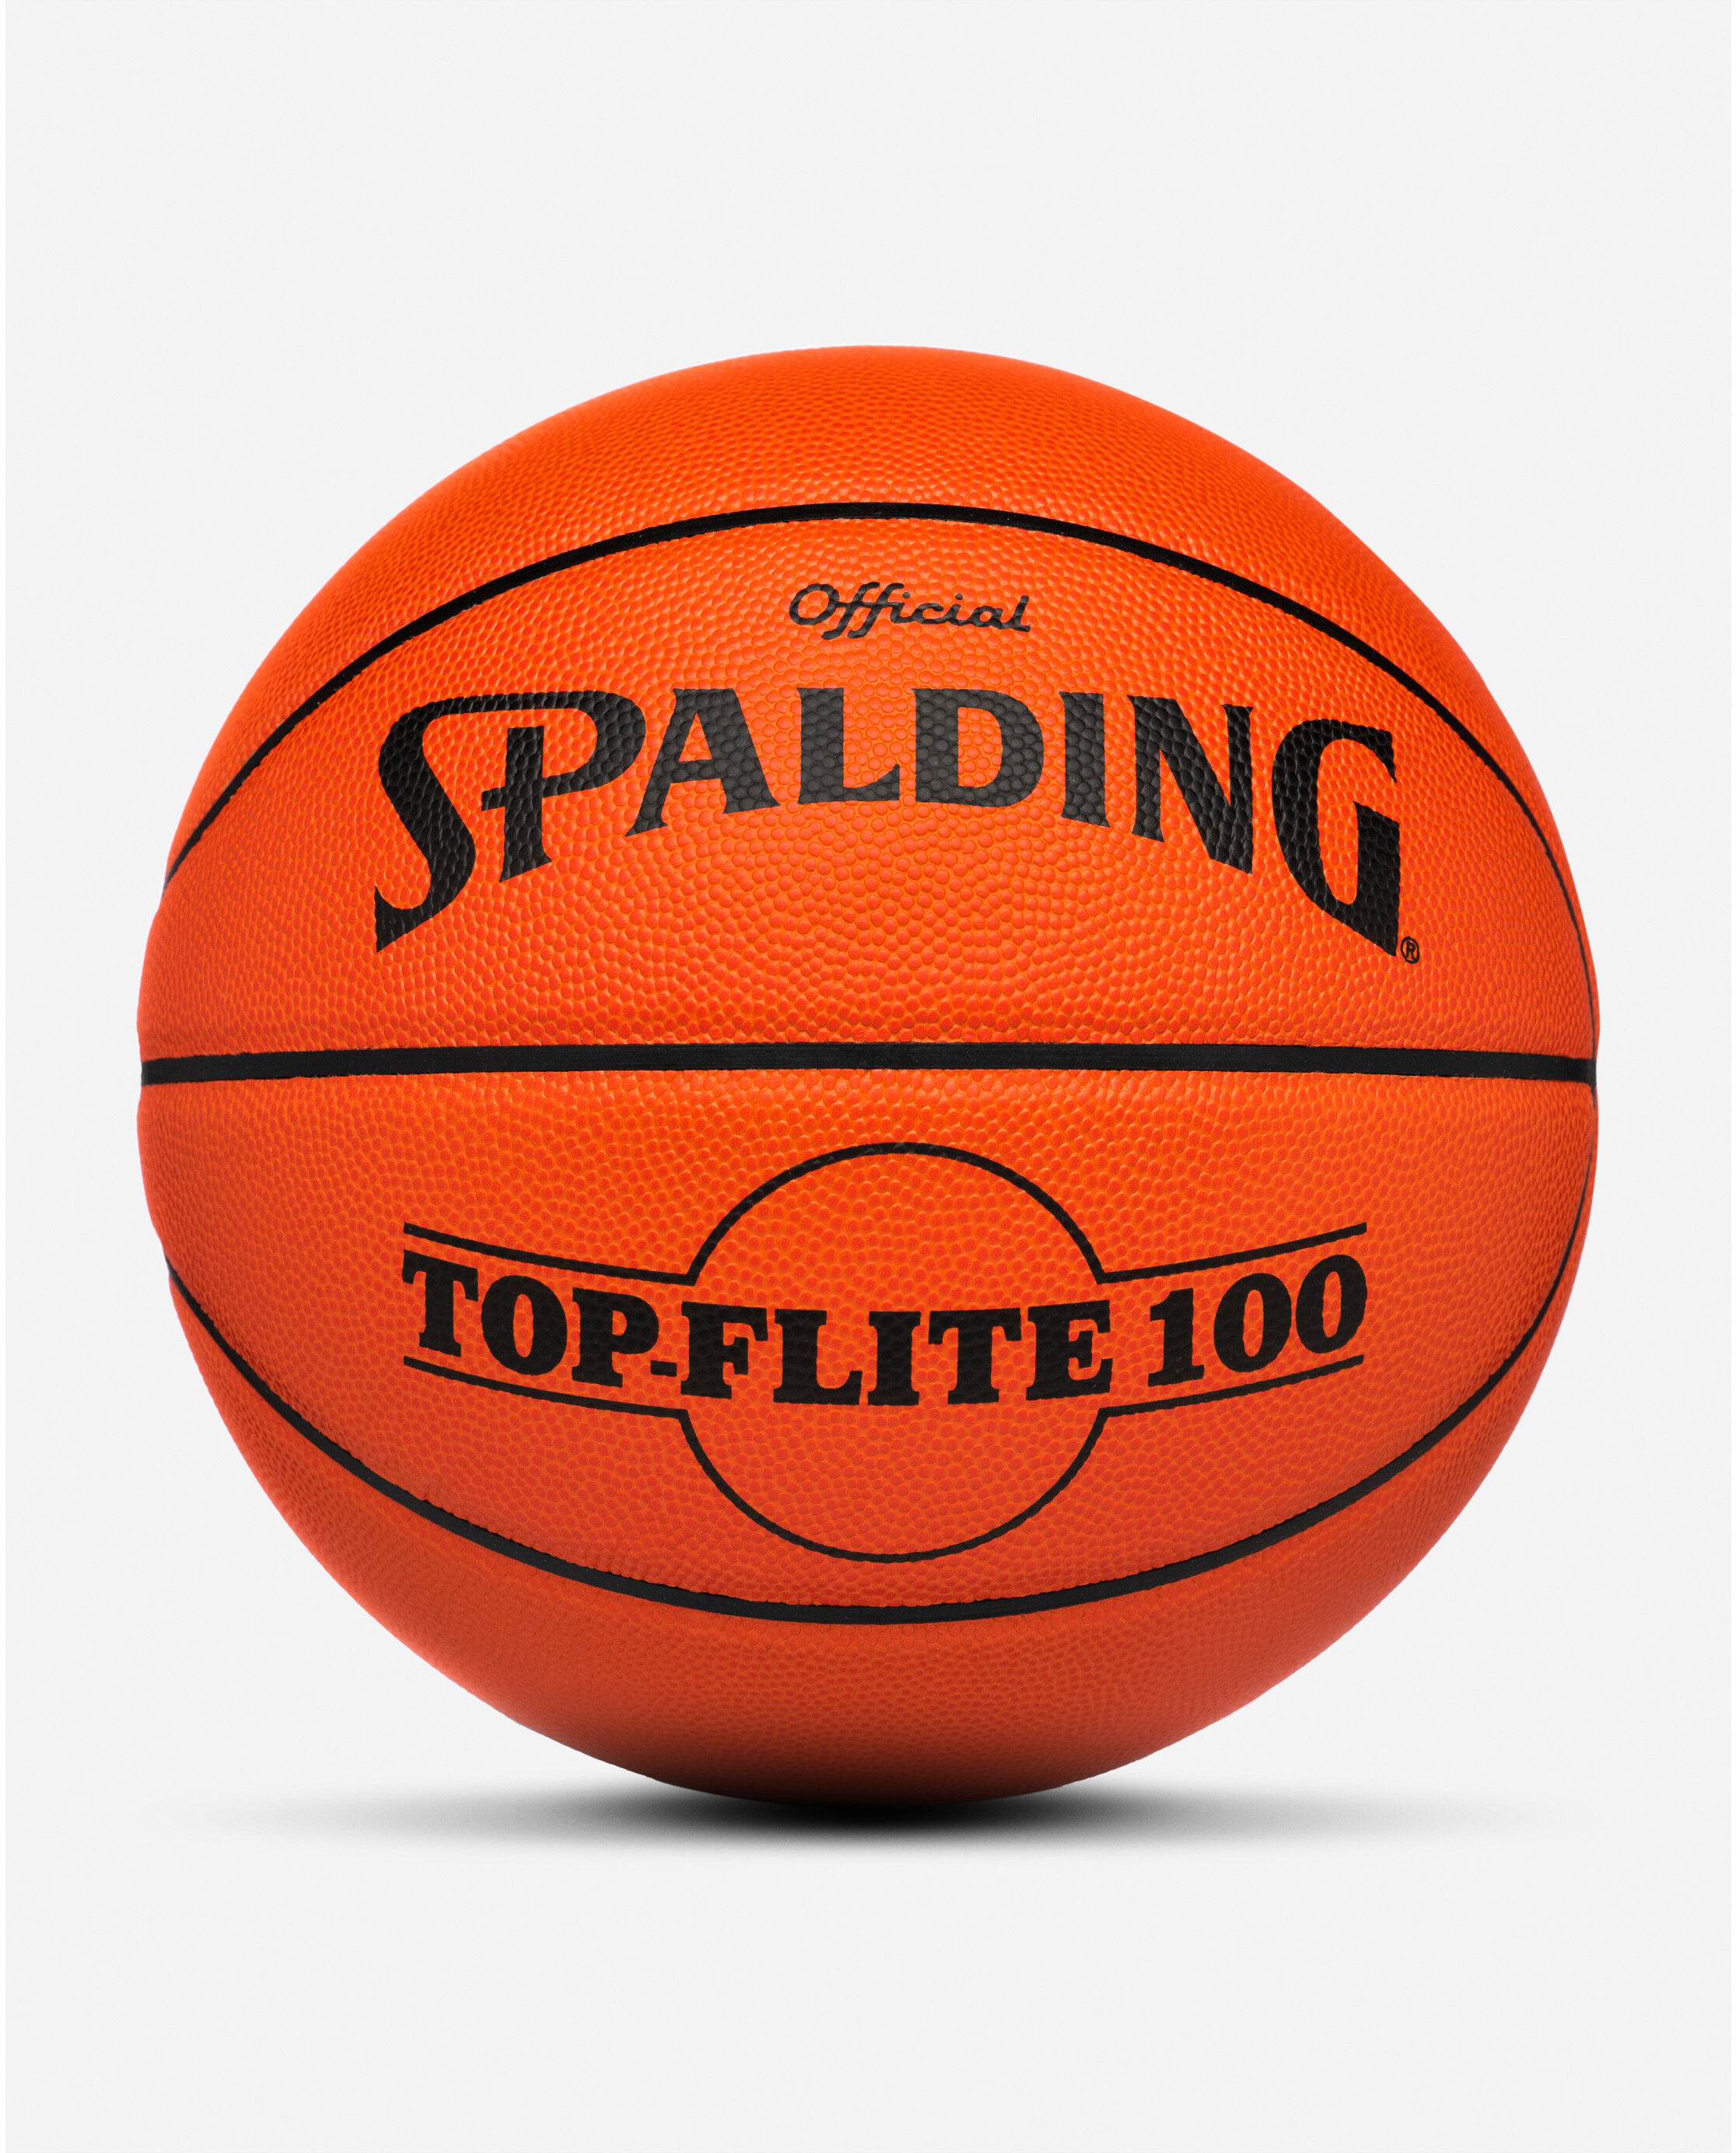 Spalding x Stranger Things Top-Flite 100 Indoor Game Basketball